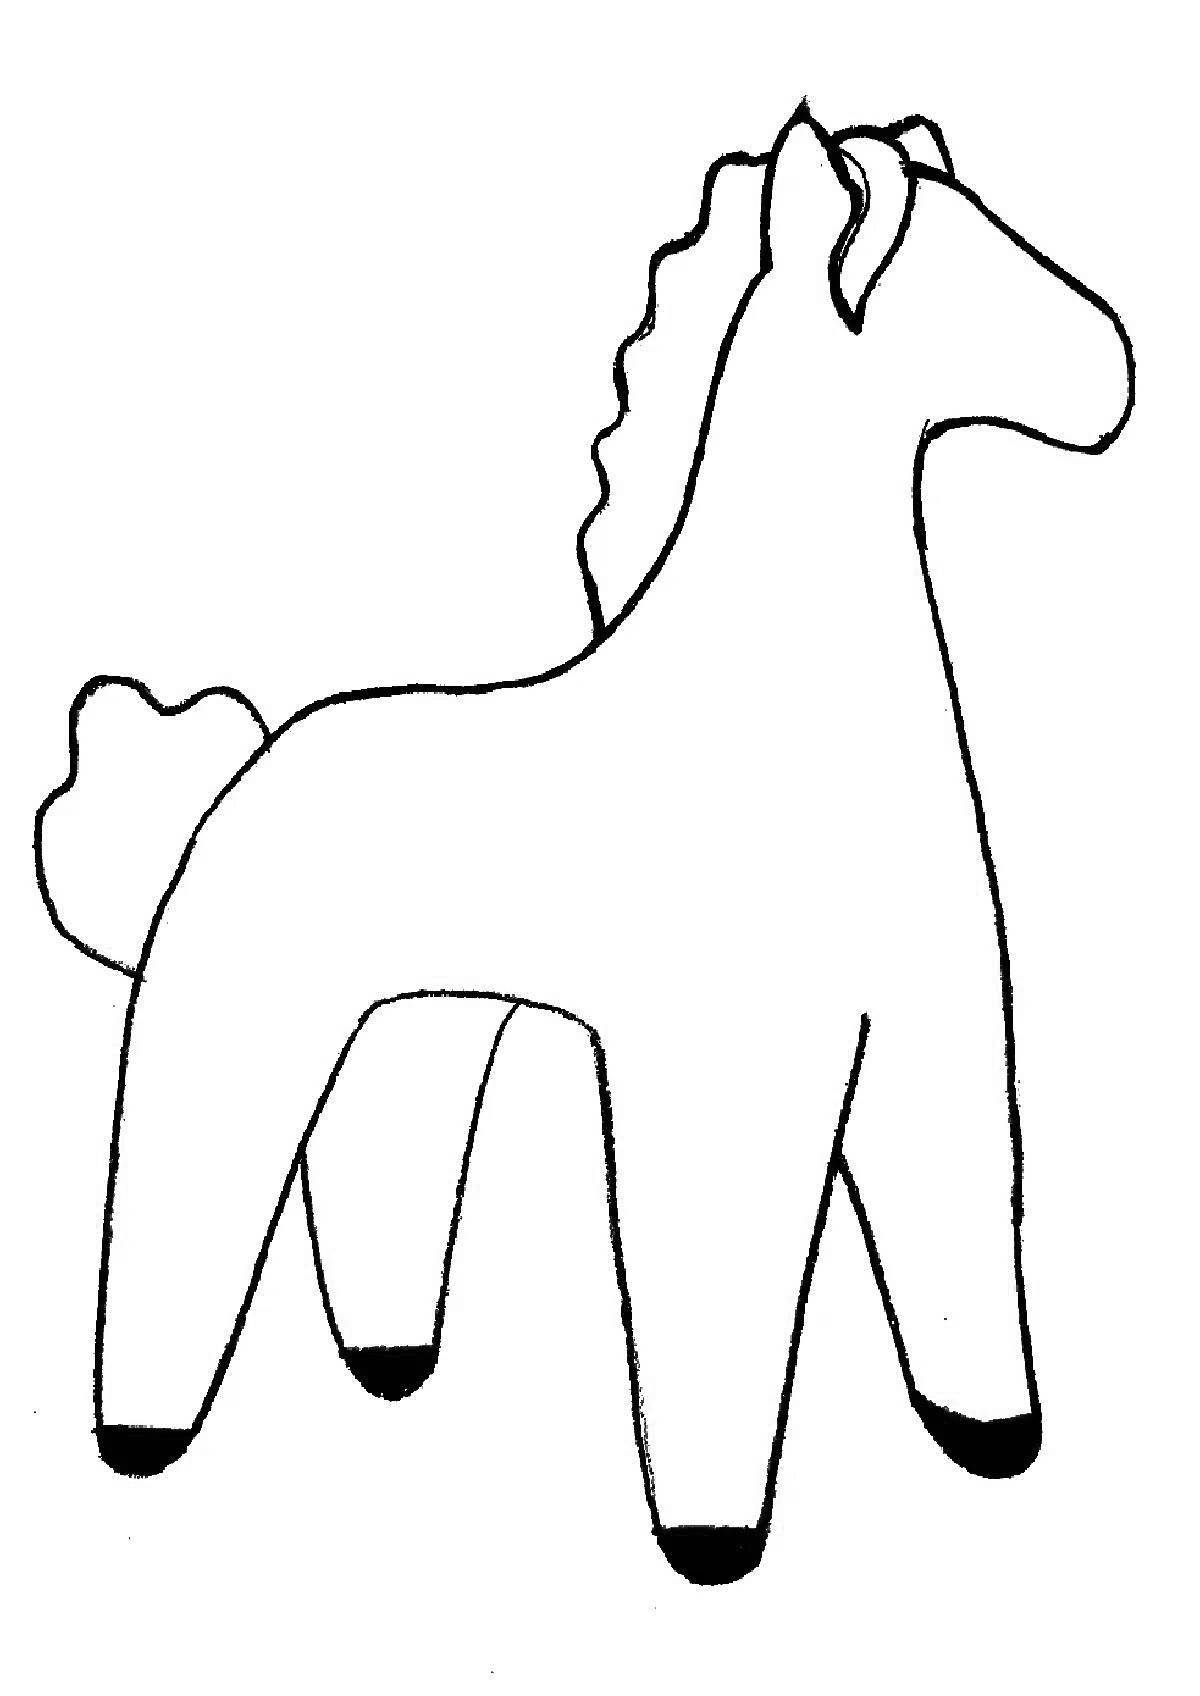 Раскраска яркая дымковская игрушечная лошадка